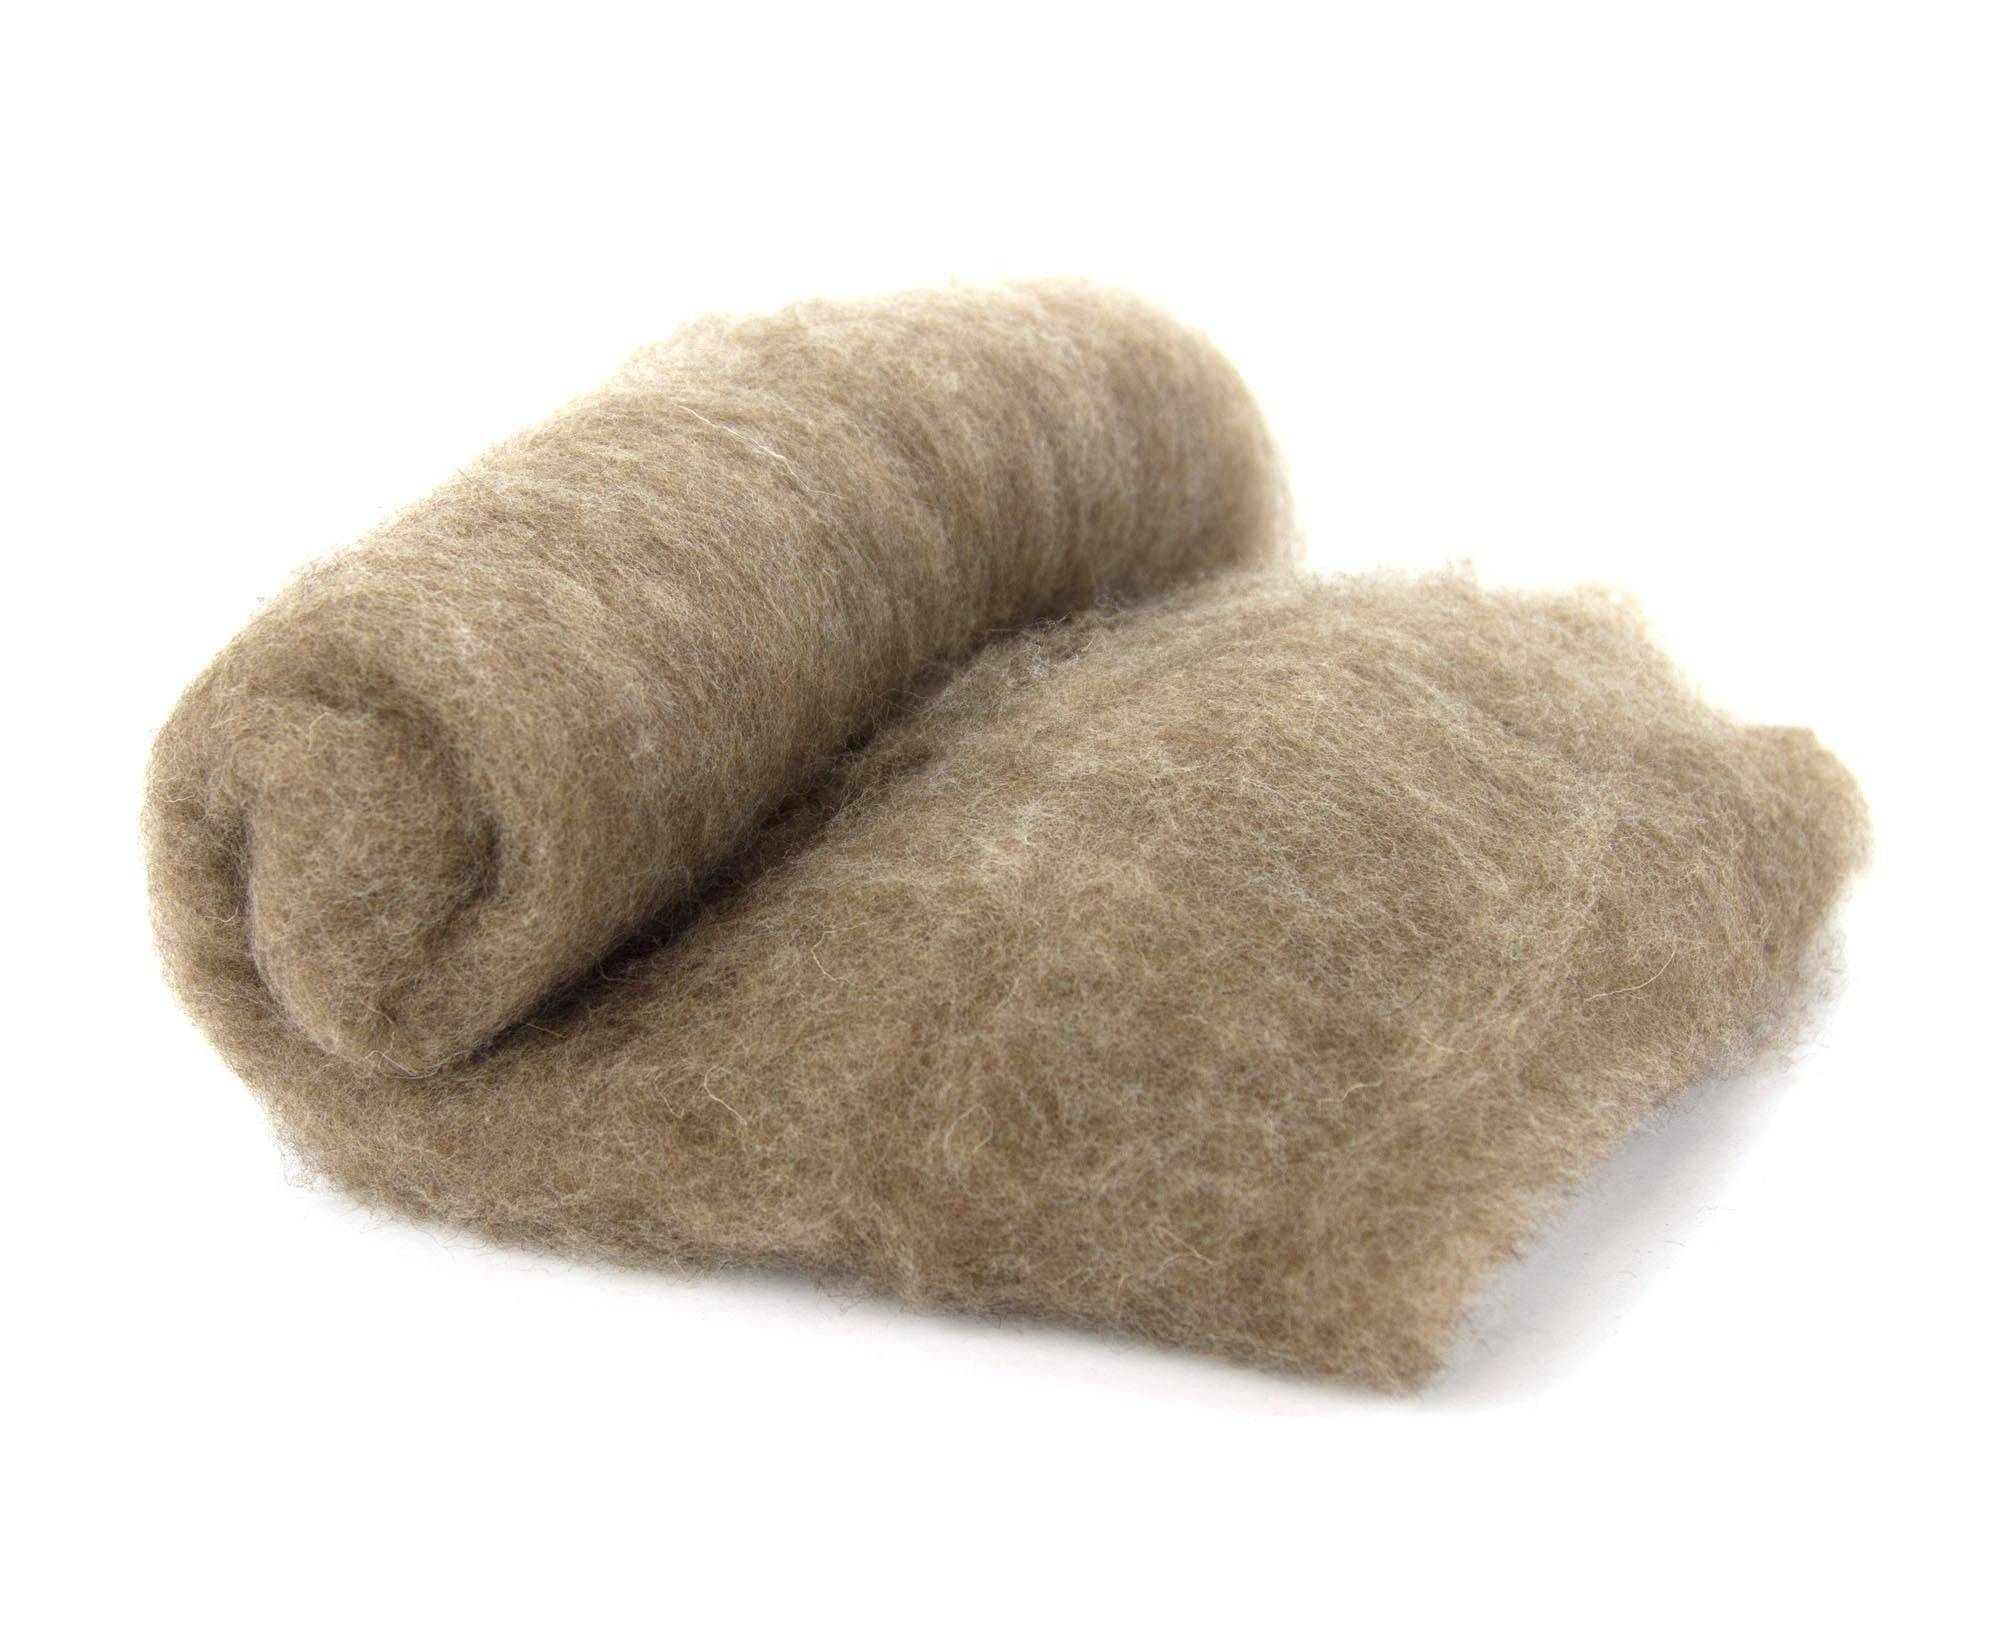 Carded Merino Batt Natural Fawn - World of Wool